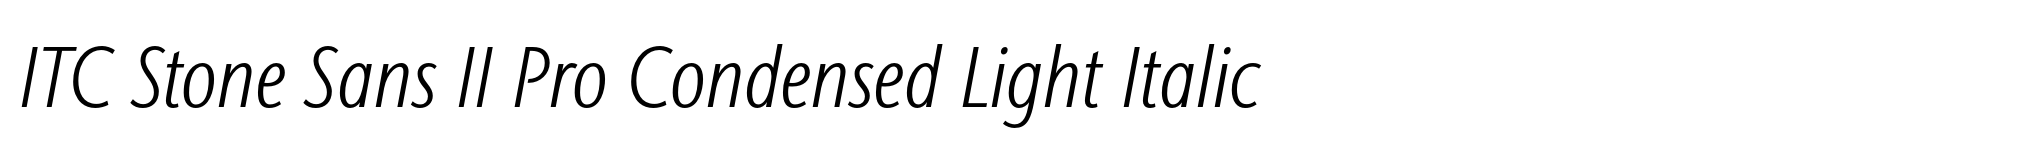 ITC Stone Sans II Pro Condensed Light Italic image